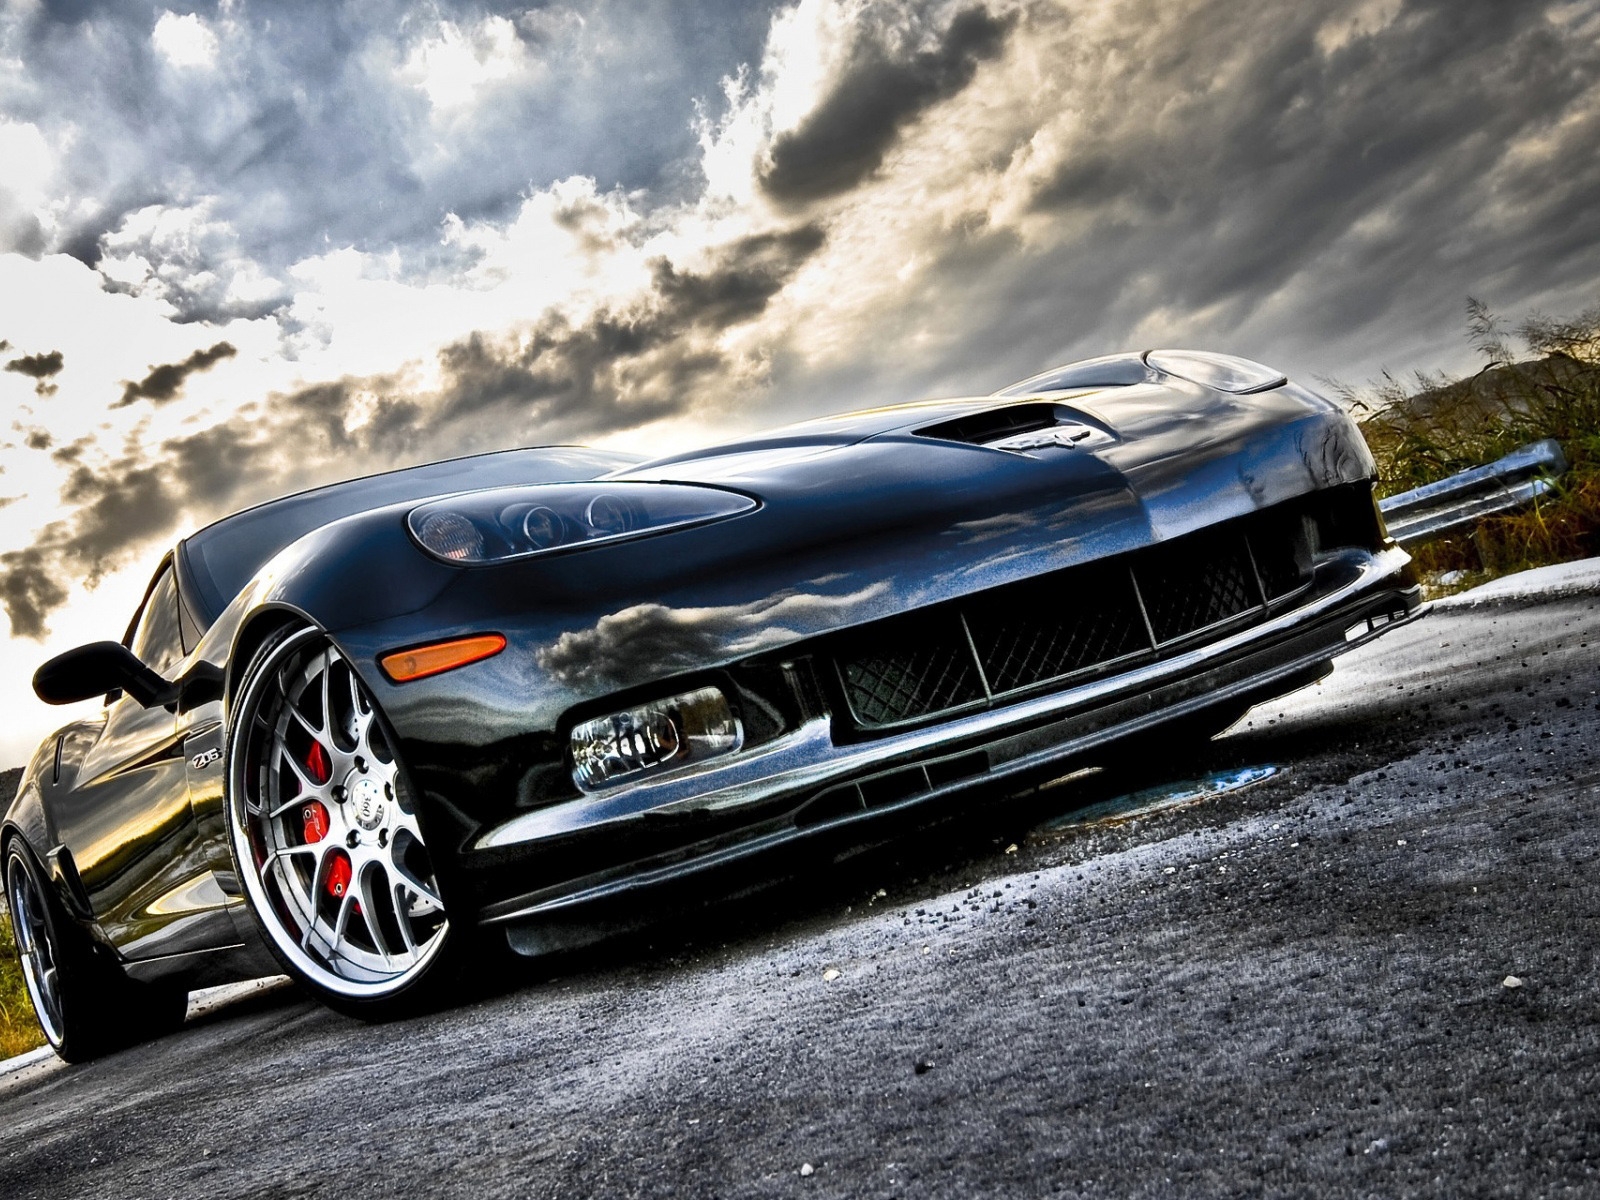 Corvette Super Sport Front Angle for 1600 x 1200 resolution